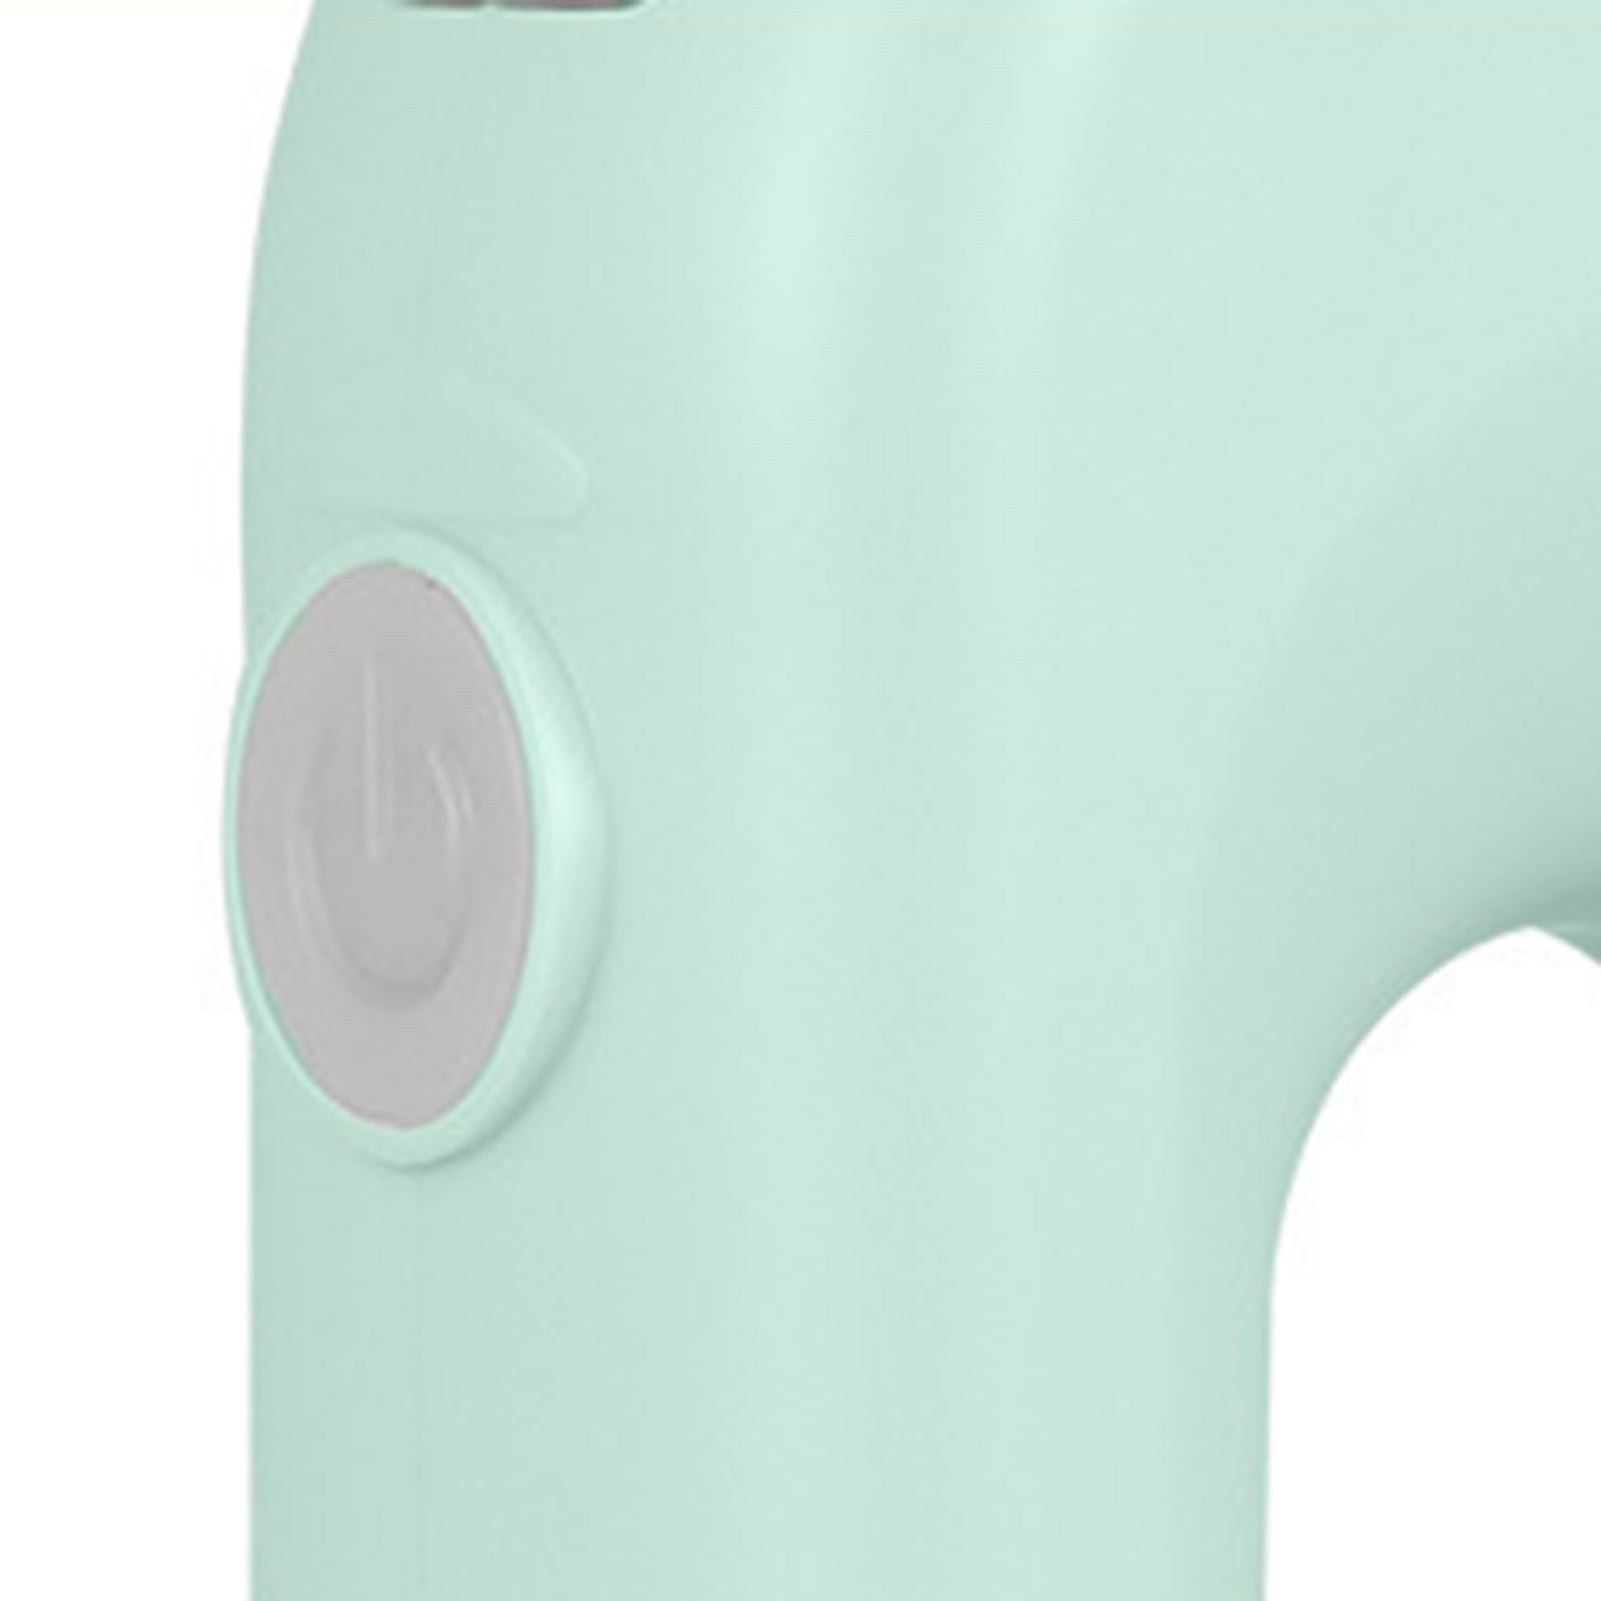 Juhai 1 Set Egg Mixer Eco-Friendly High Speed Plastic Handheld Electric Food Blender for Home(Pink)